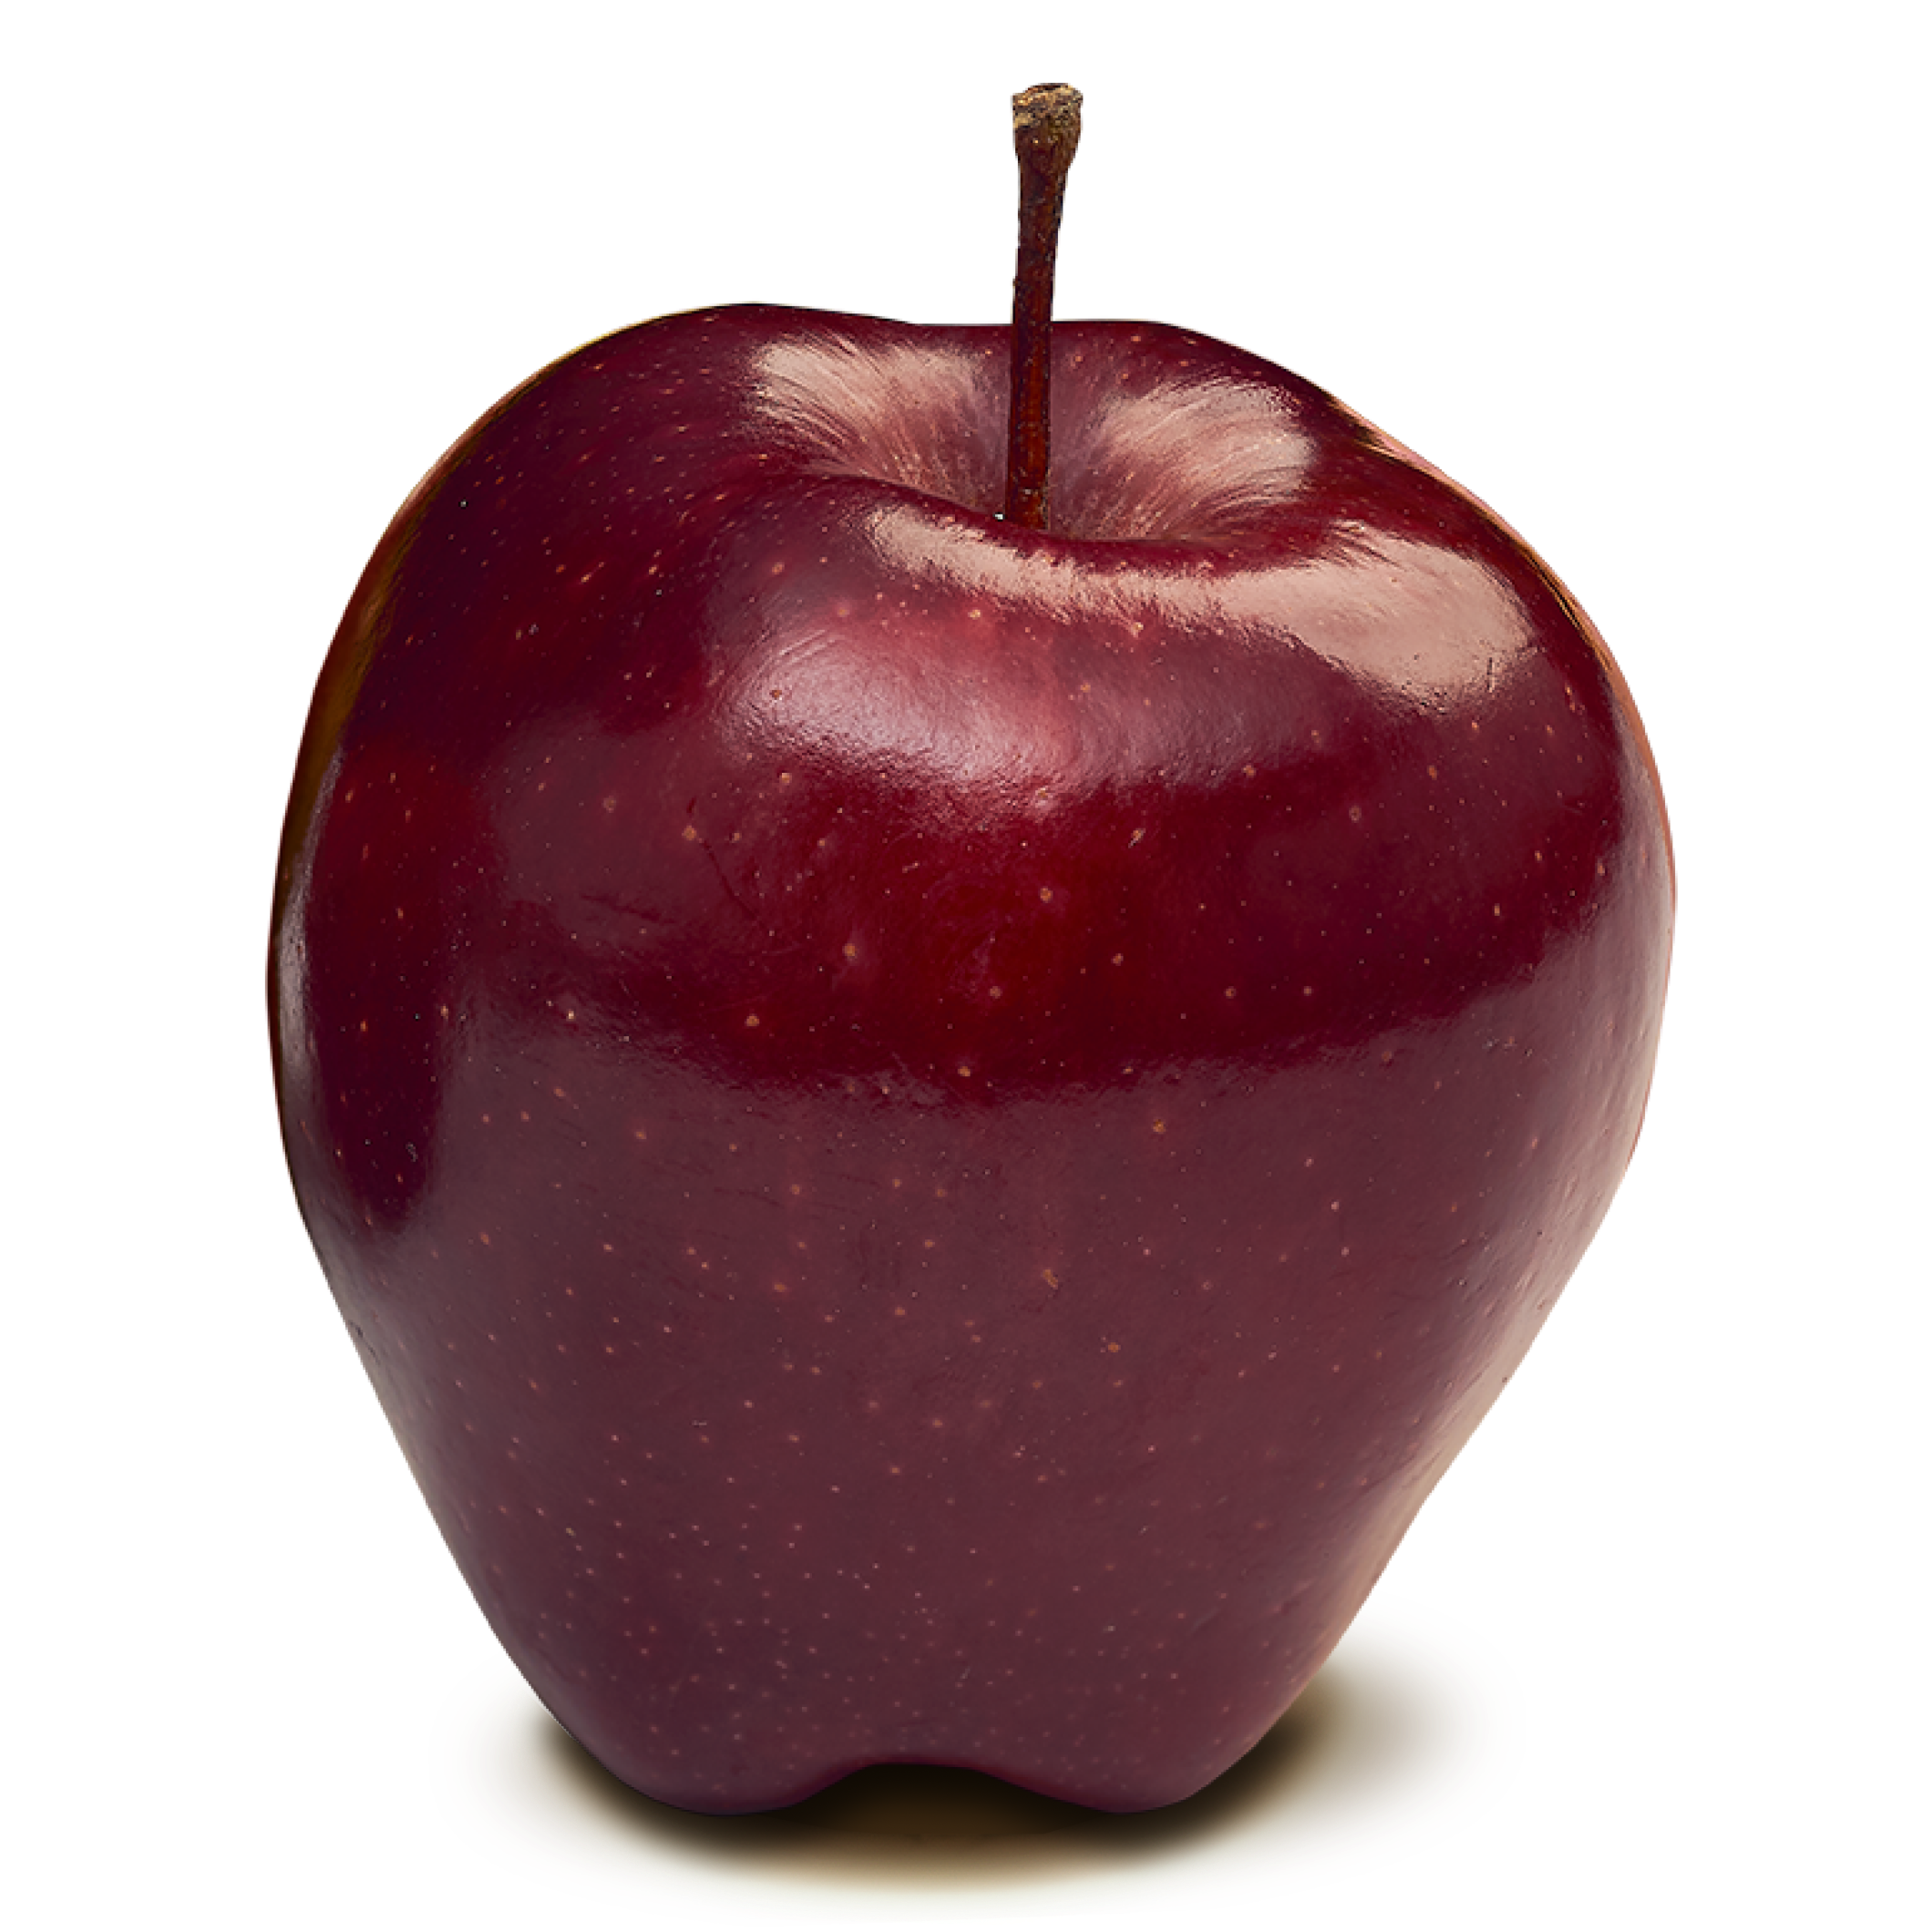 patois Skære th Red Delicious - Washington Apples